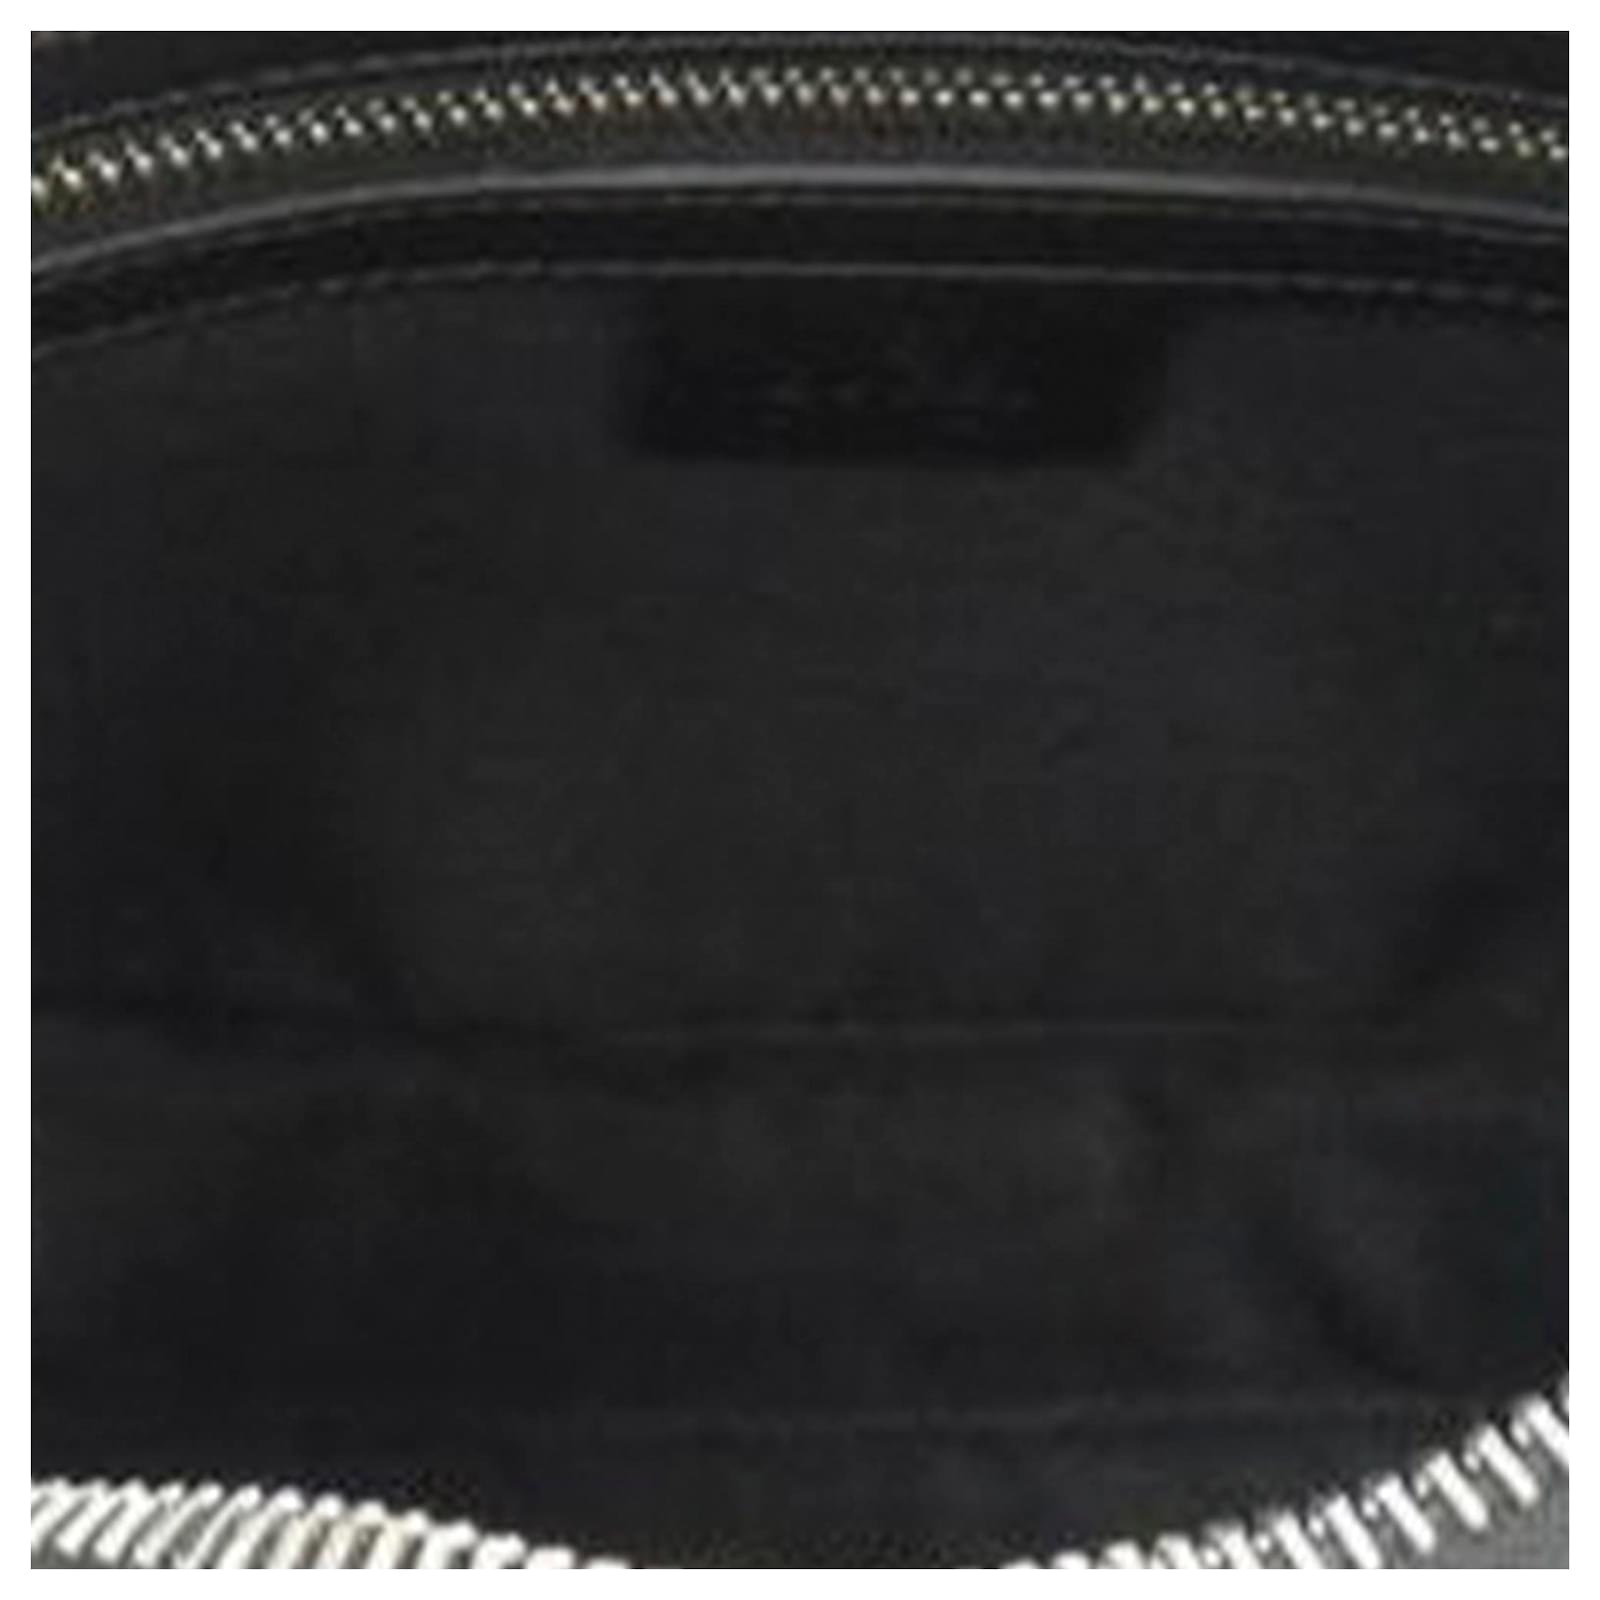 Gucci GG Supreme Belt Bag - Black Waist Bags, Handbags - GUC1316911